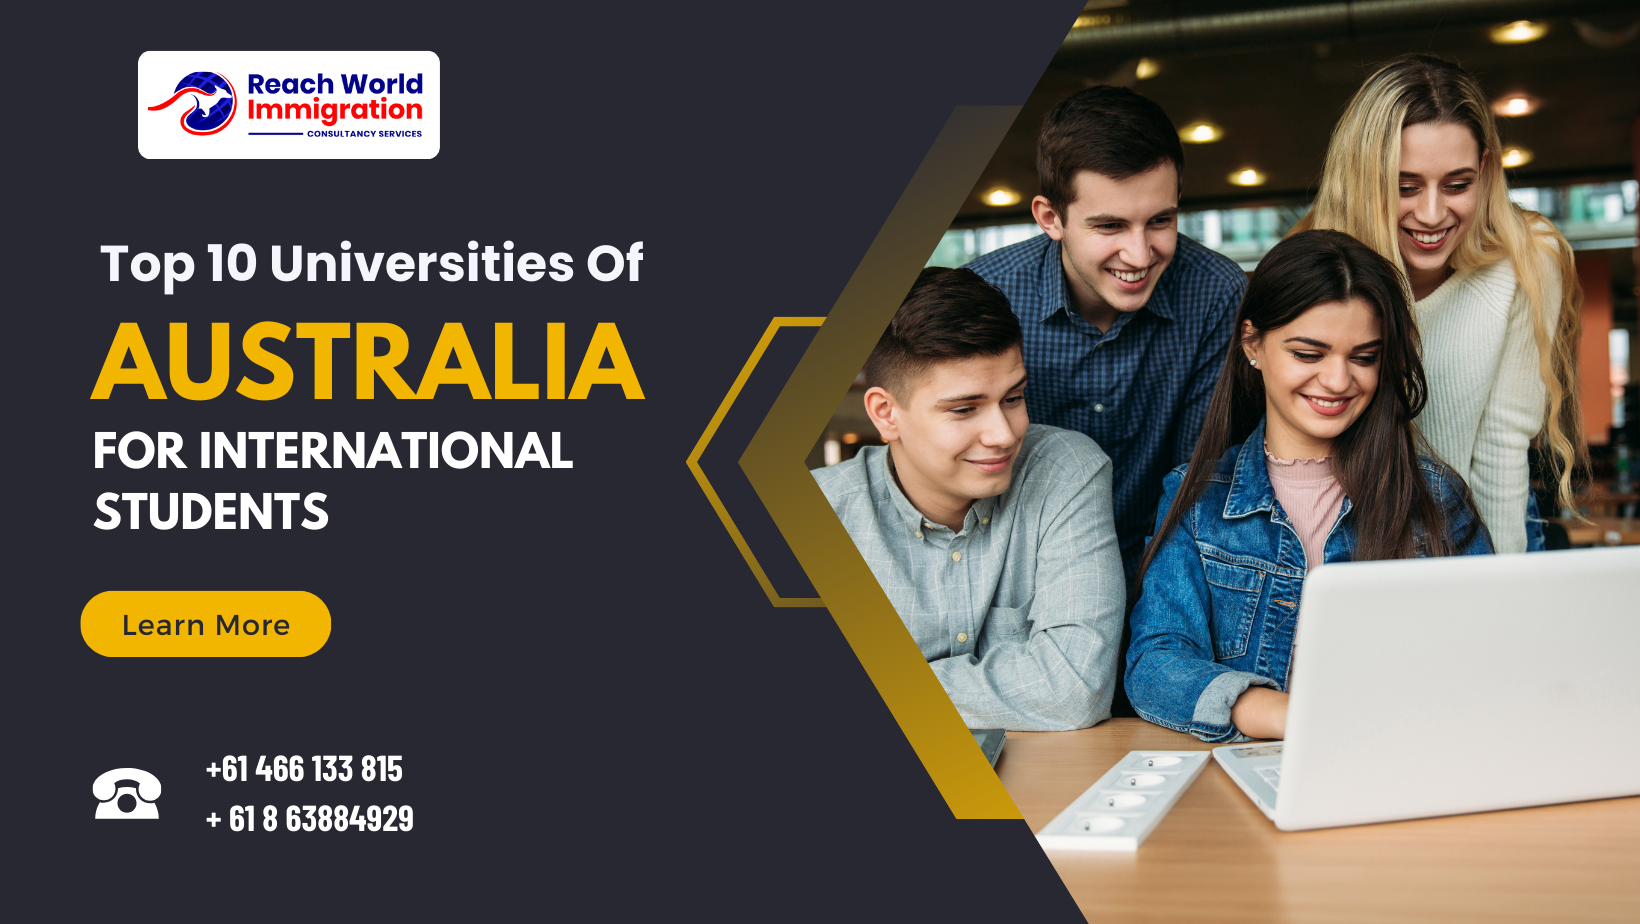 Top 10 Universities of Australia for International Students